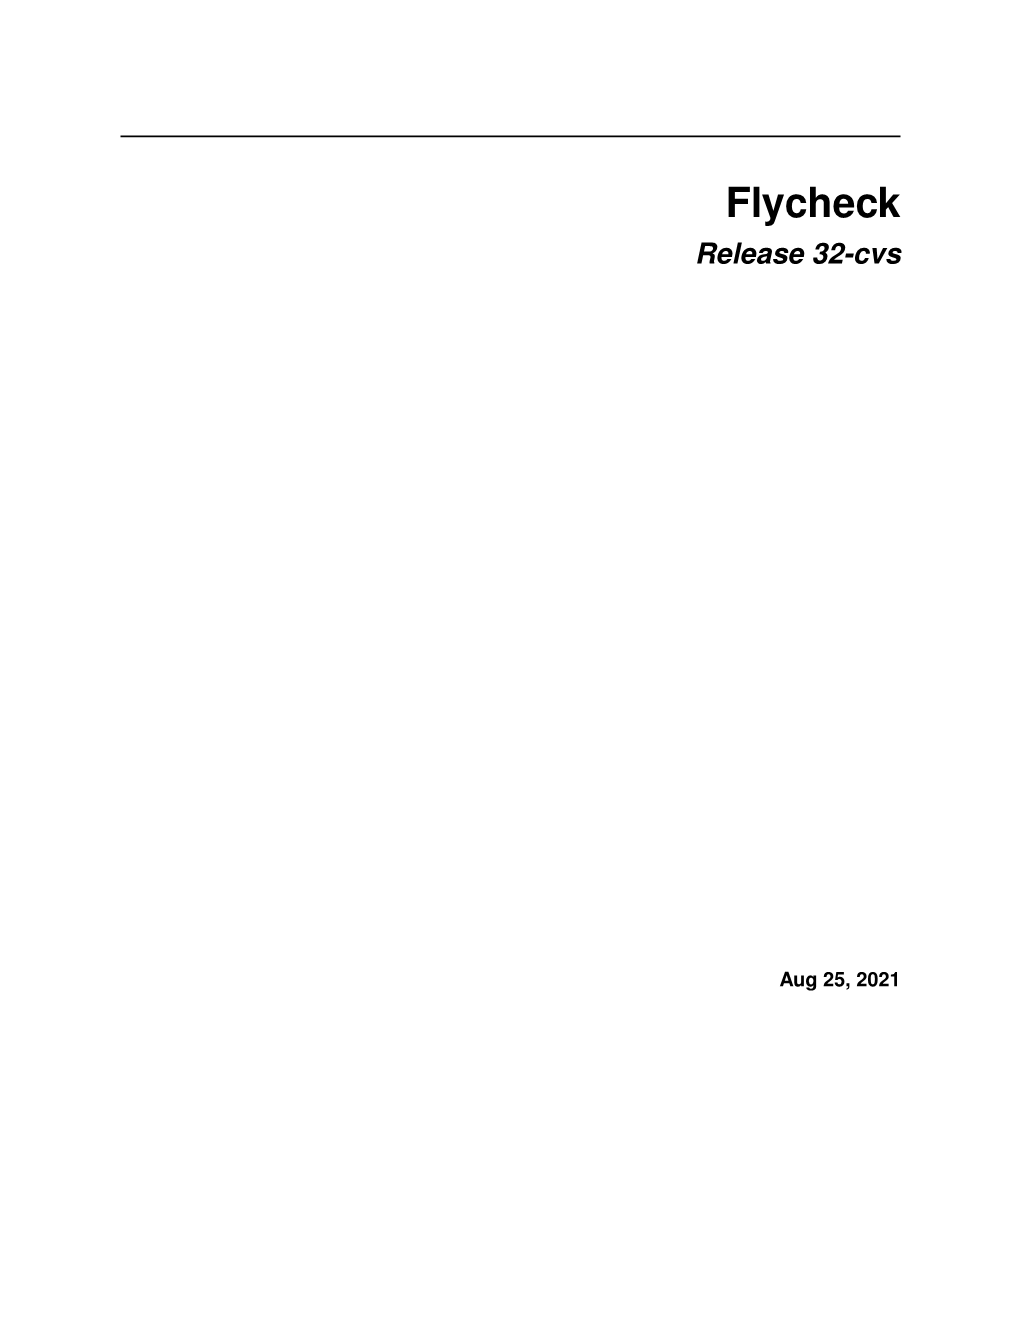 Flycheck Release 32-Cvs